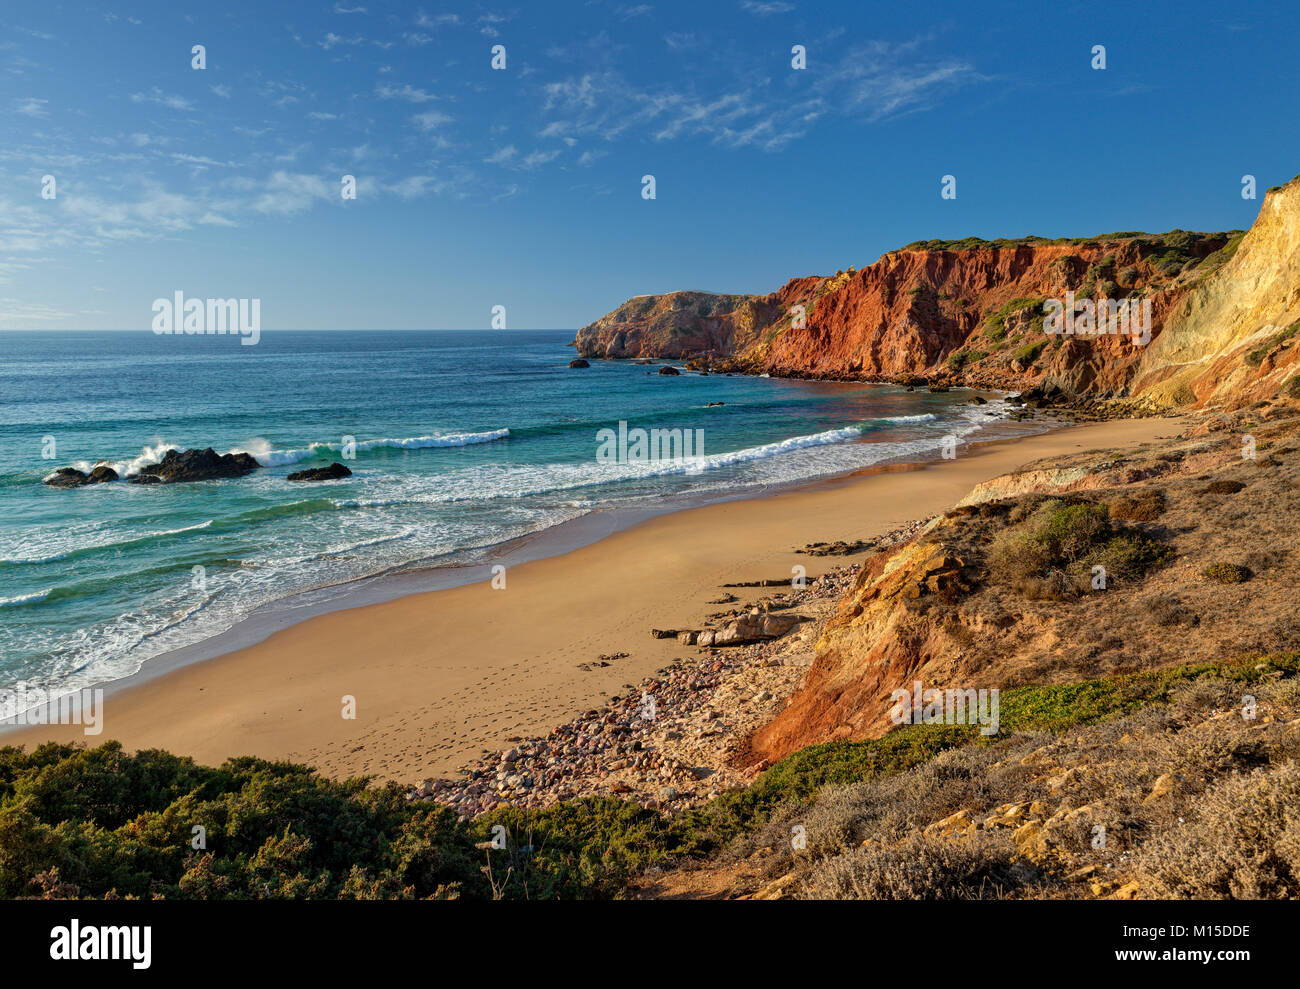 Praia do Amado, on the Costa Vicentina in the Algarve. Stock Photo